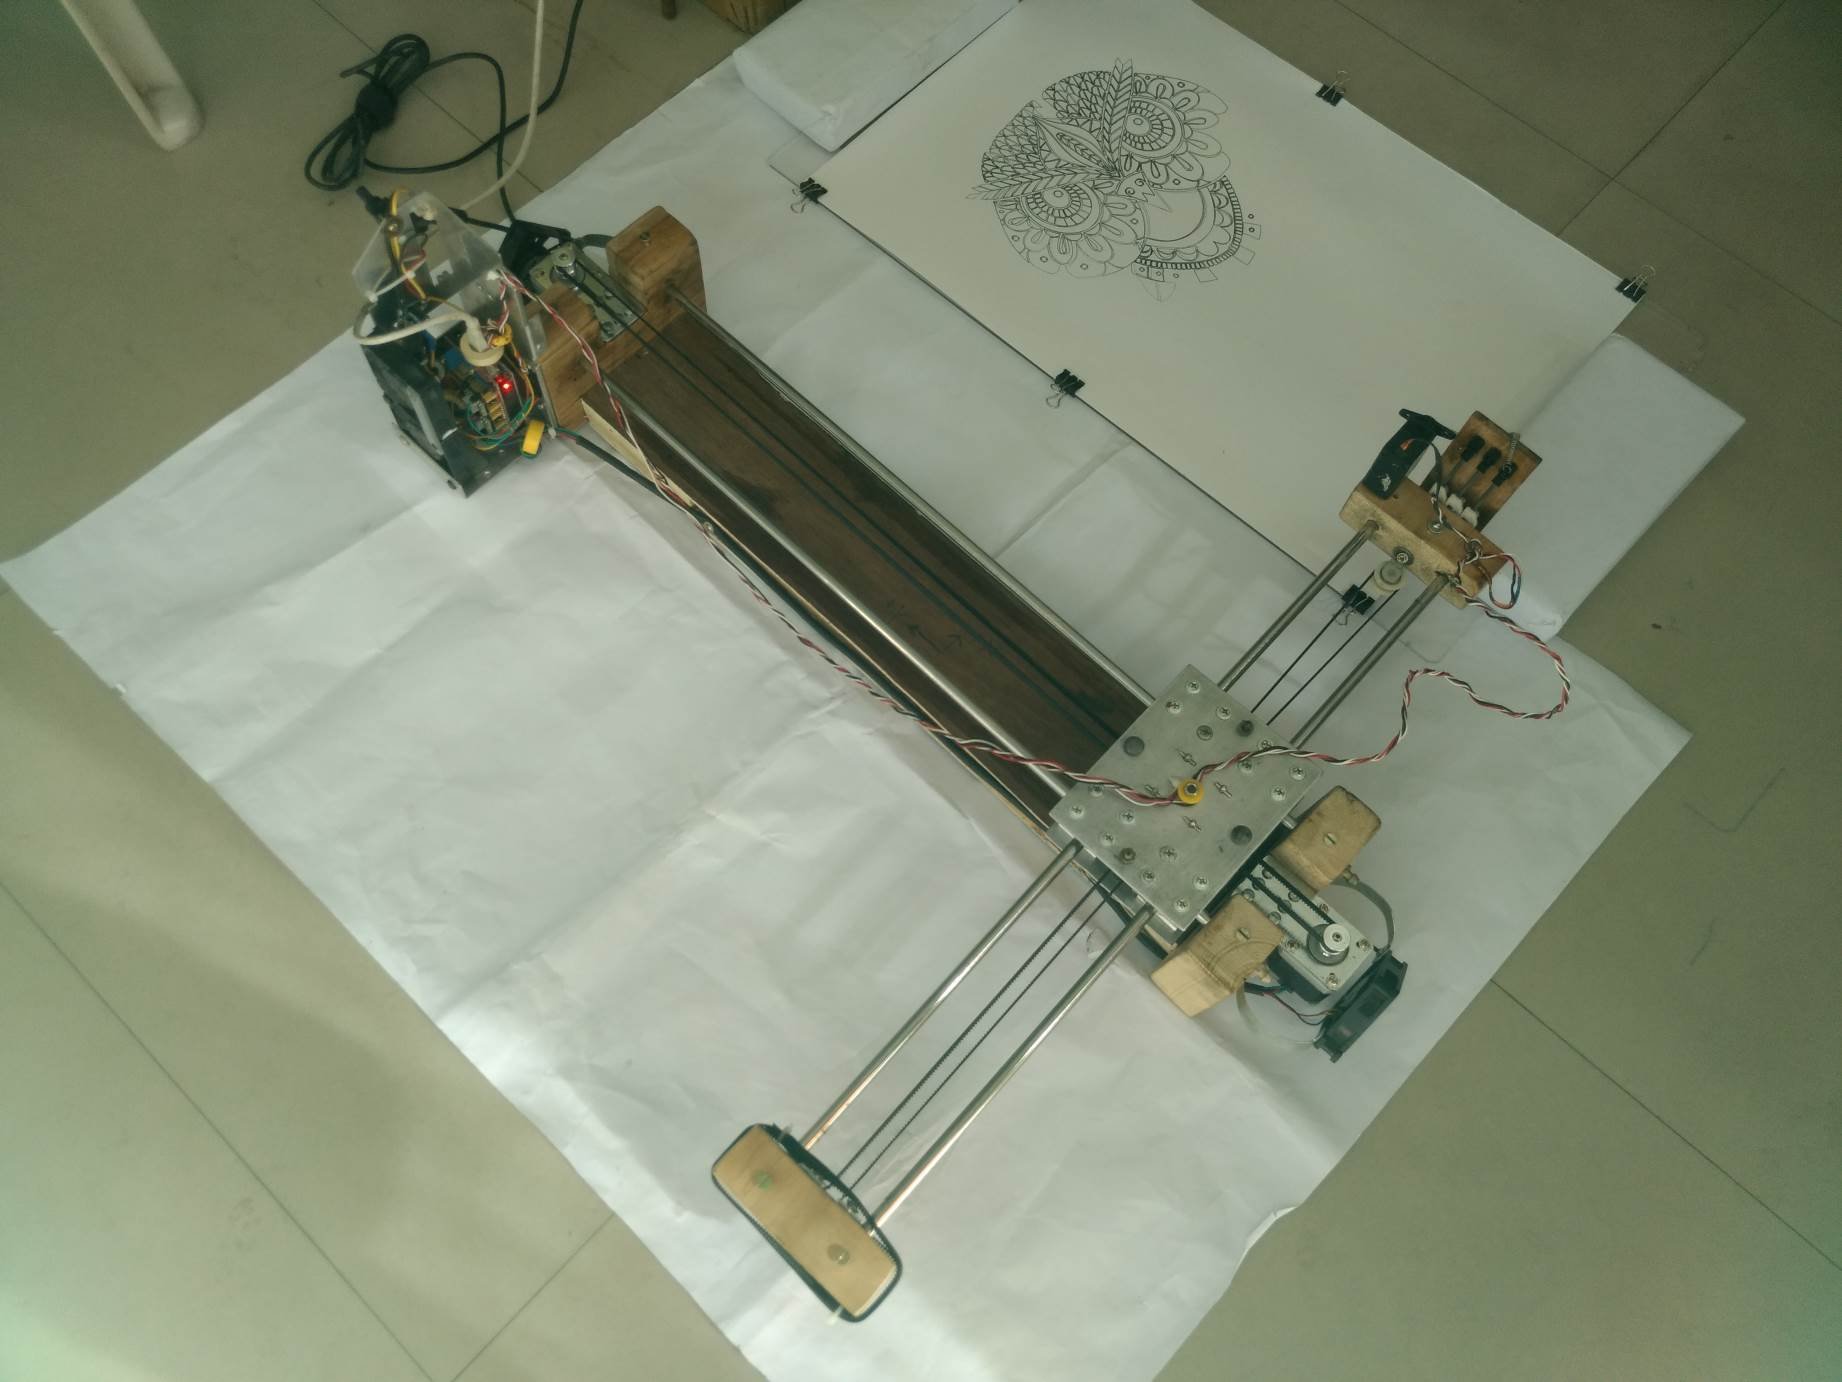 XY Plotter 2 Axis Drawing/Painting/Writing Robot CNC Turkey | Ubuy